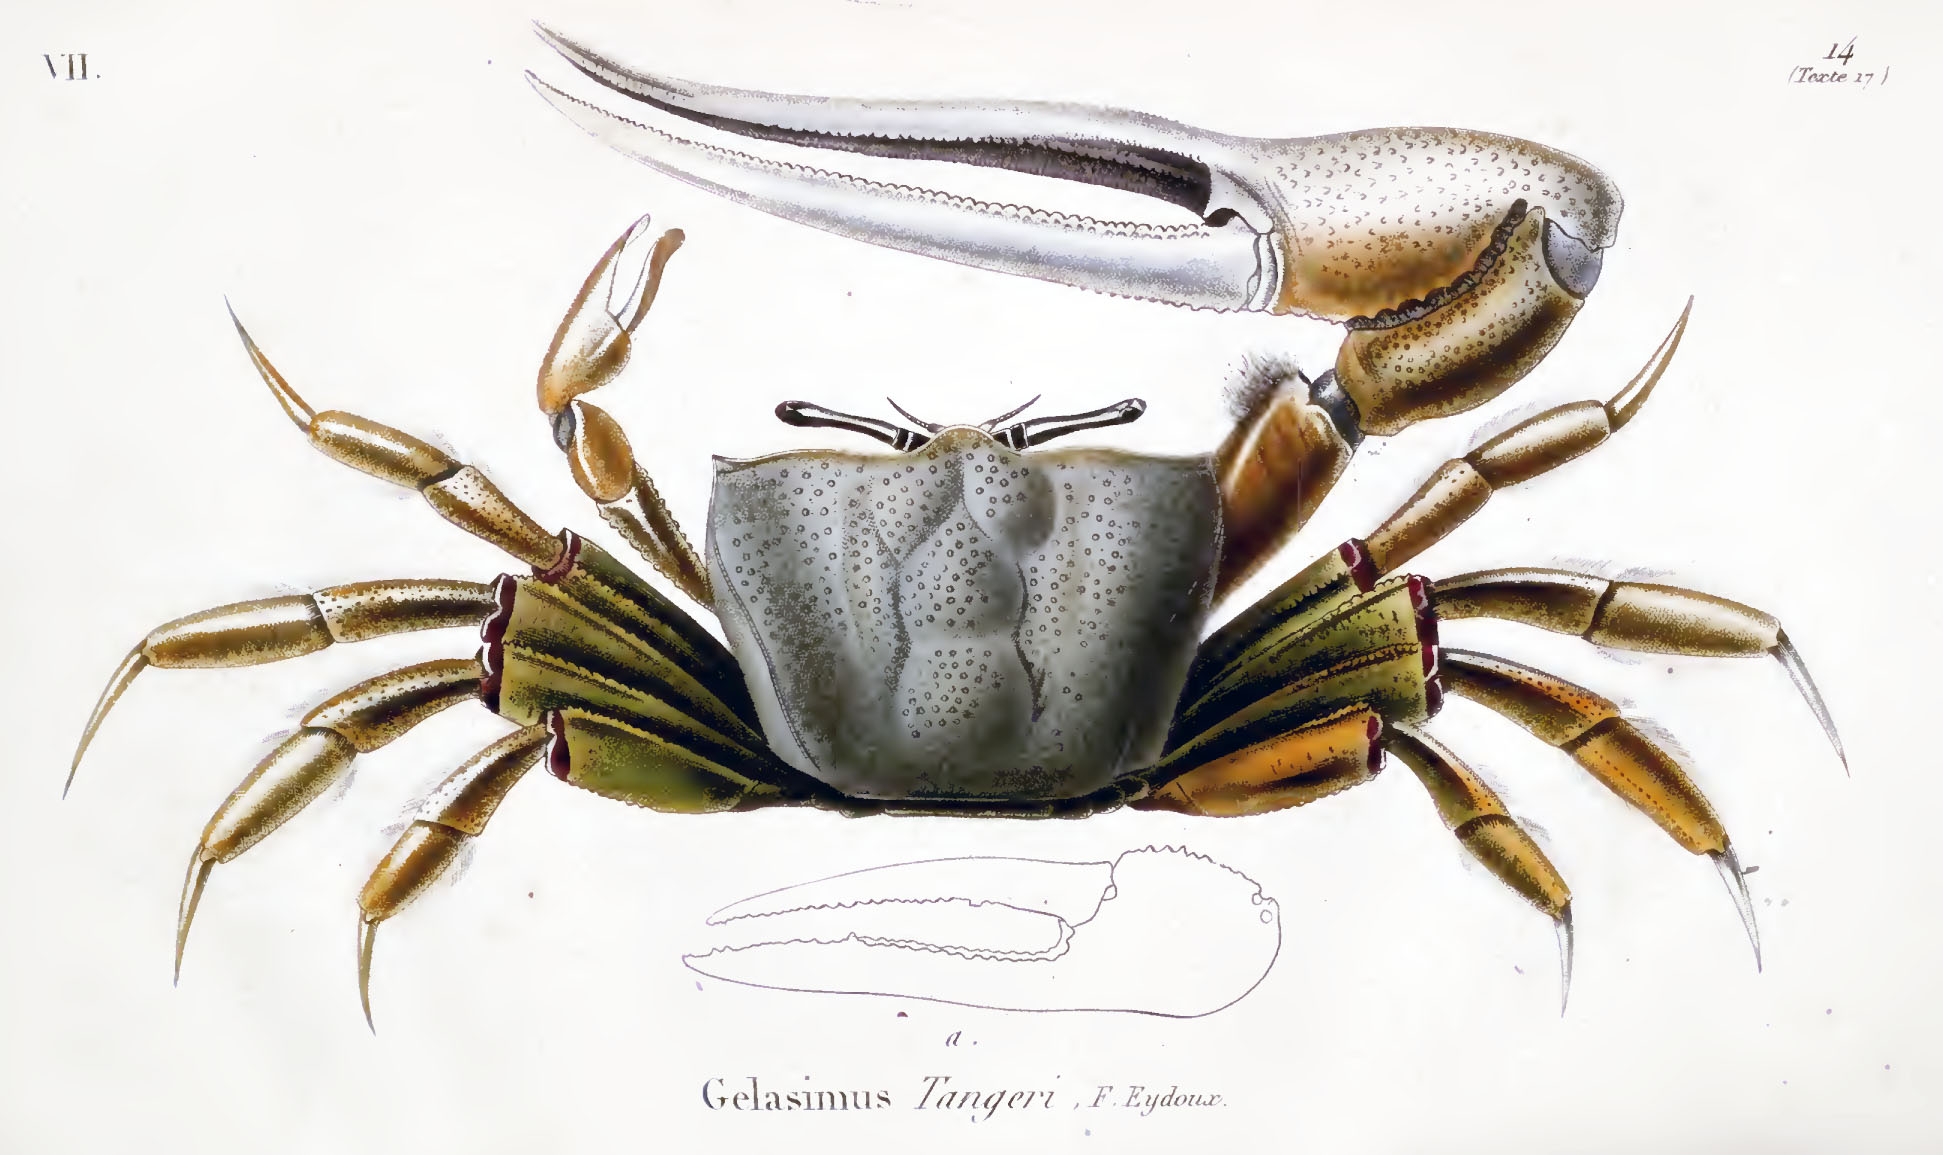 Gelasimus tangeri: Eydoux (1835) image